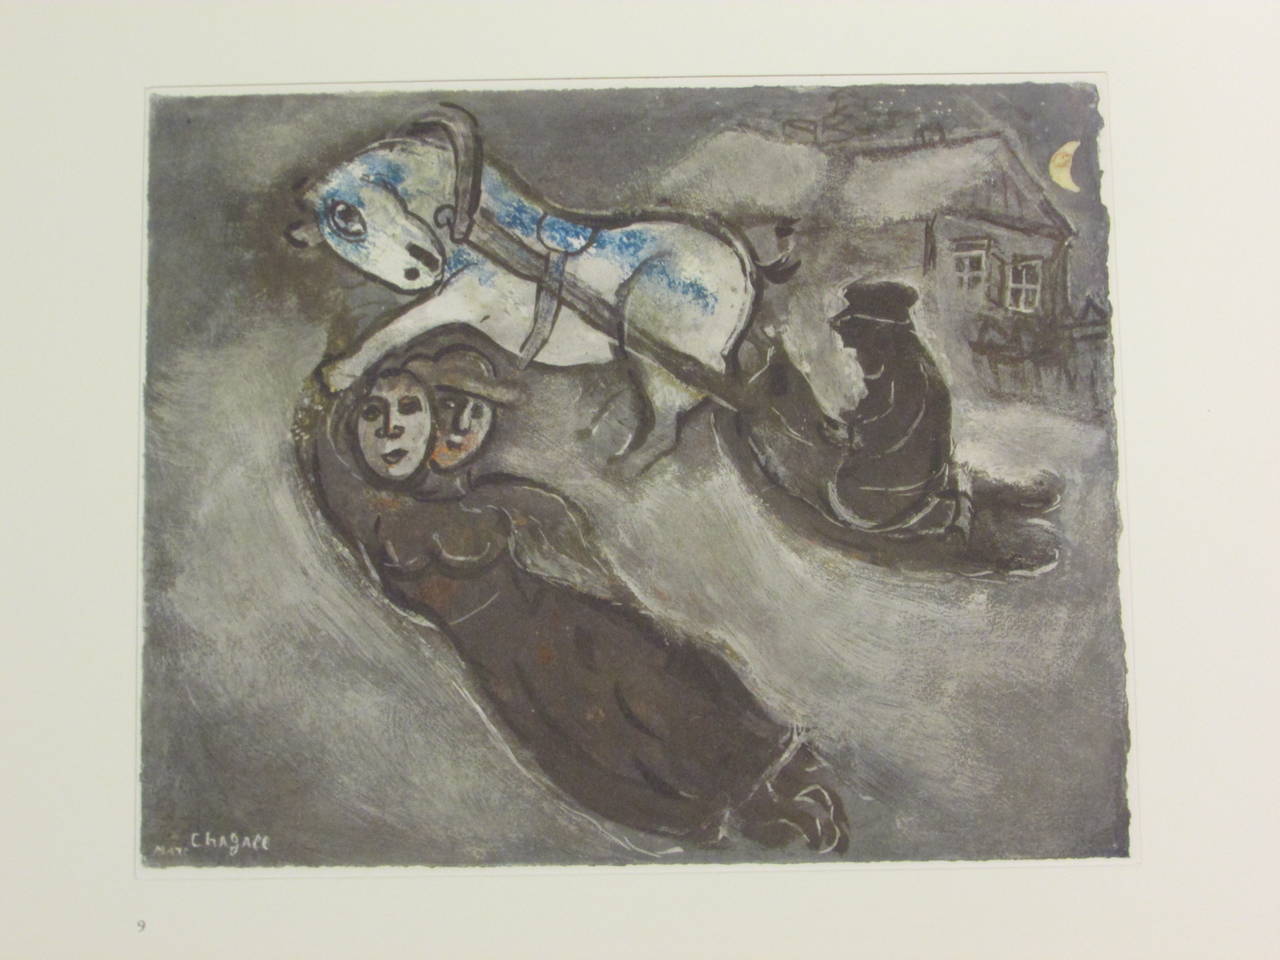 Marc Chagall Gouaches - Limited Edition in Facsimile - Portfolio Book 1